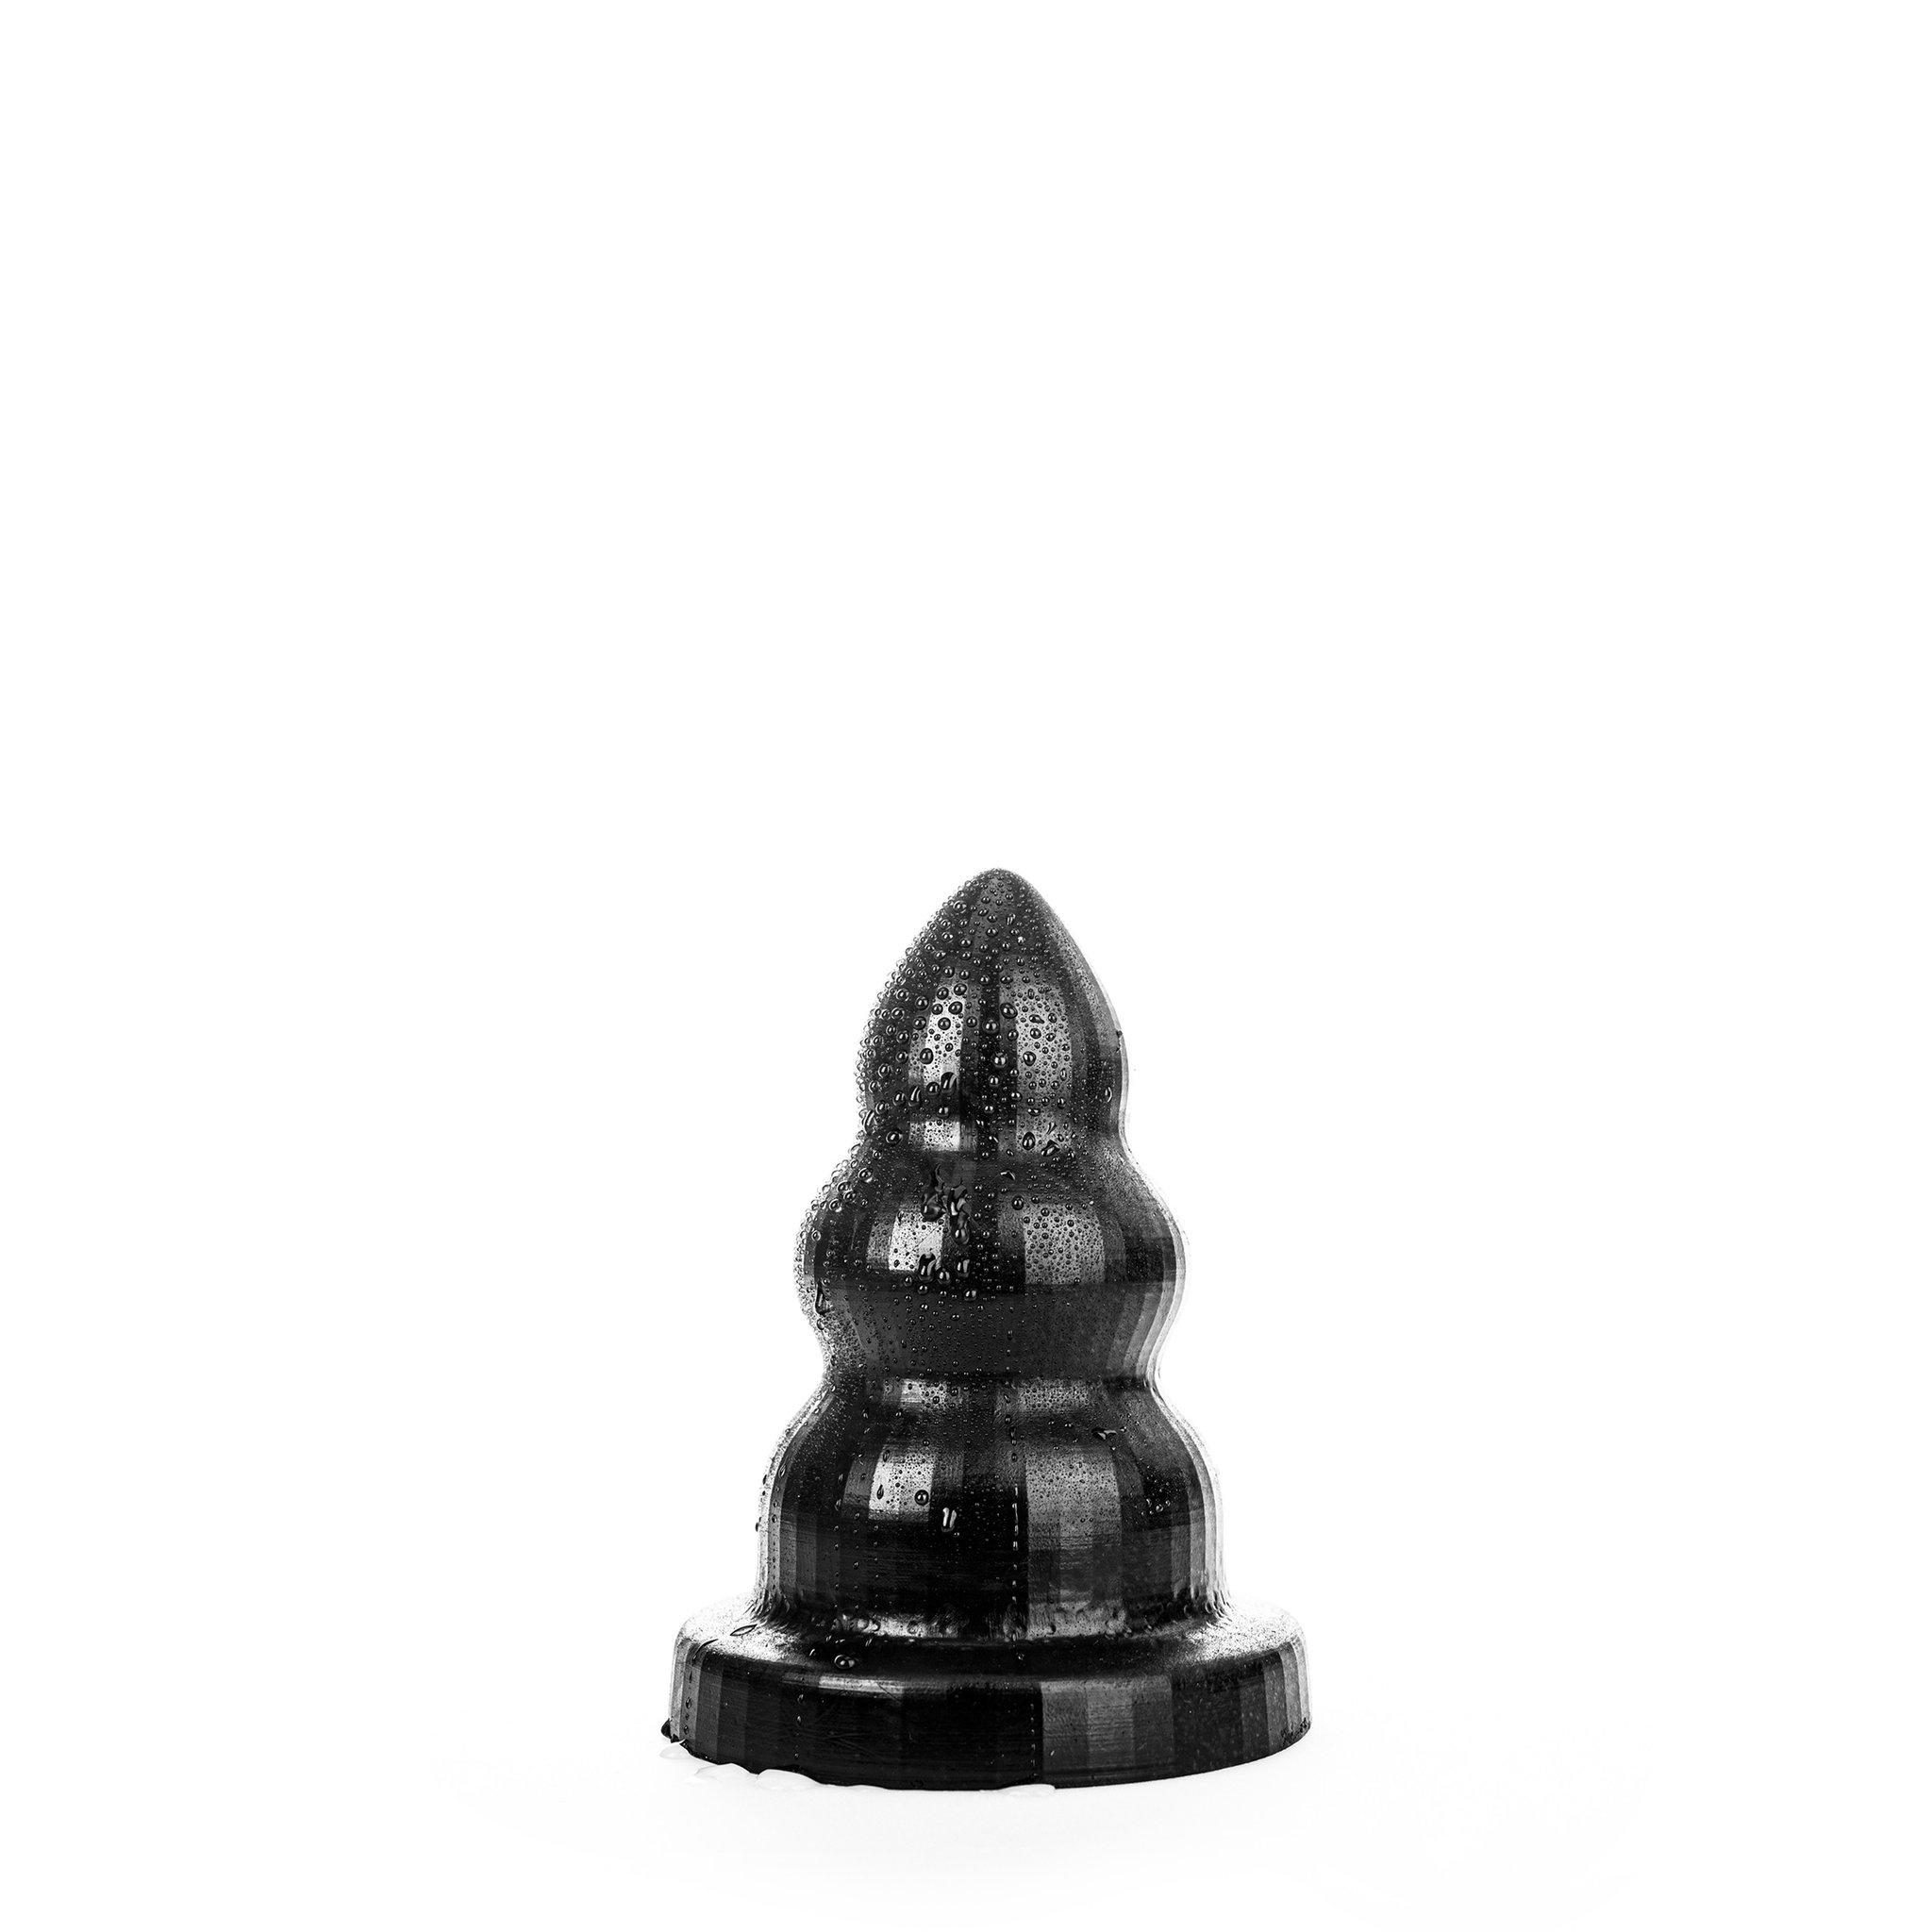 All Black Triple Pleasure S Butt Plug, 21,5 cm